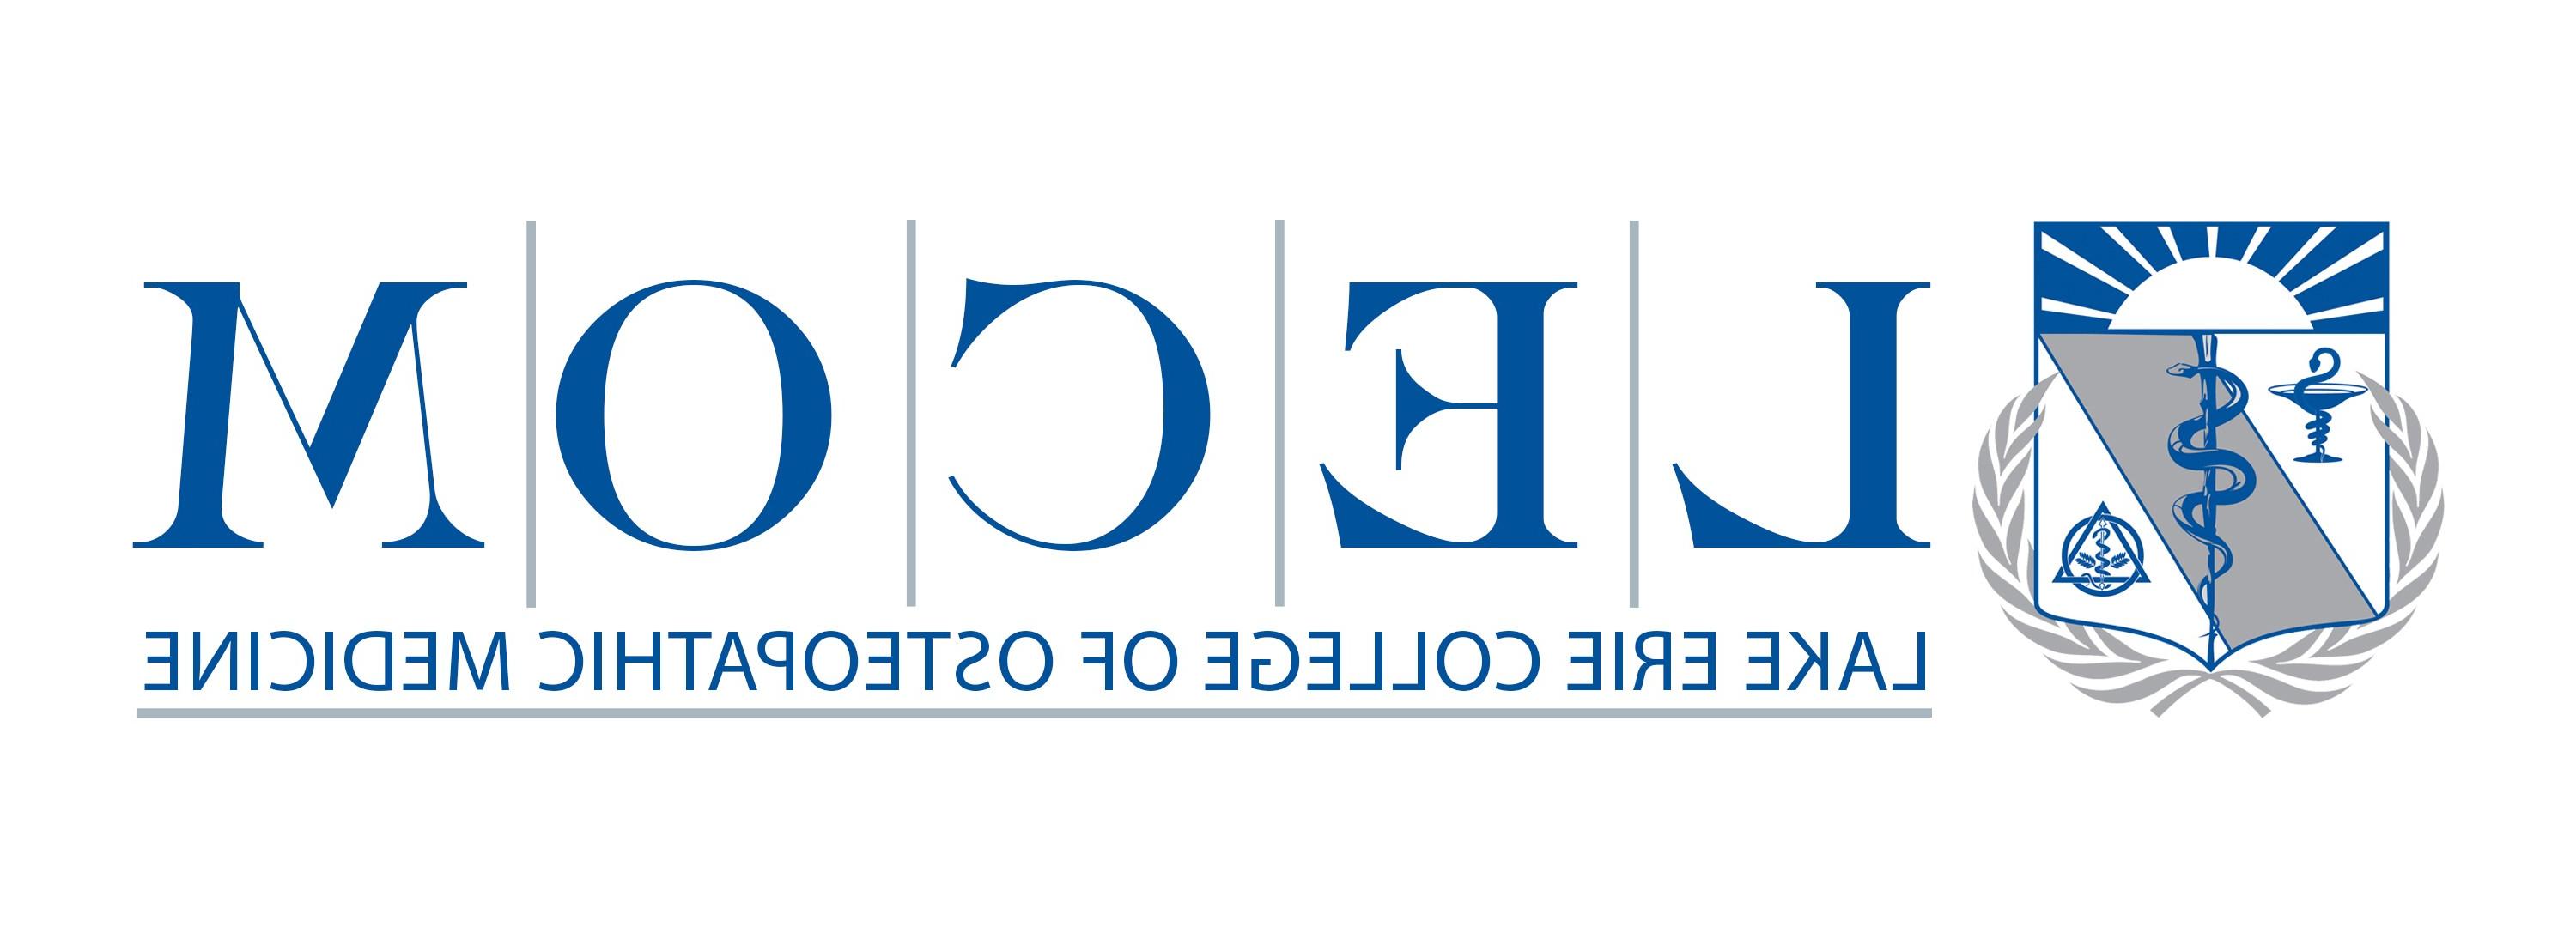 Lecom Logo Shield Image